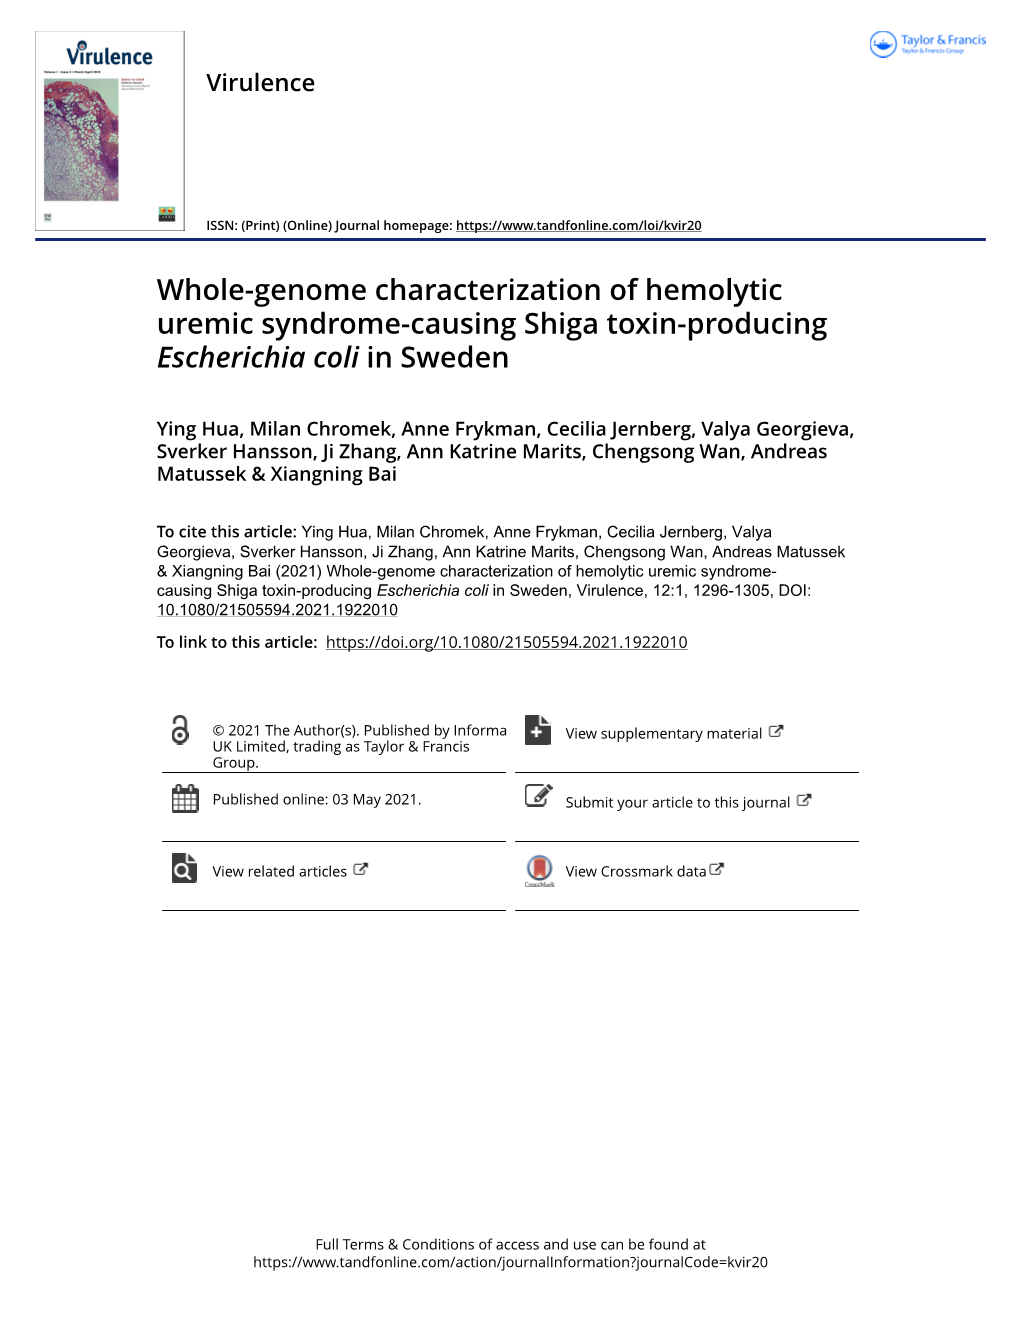 Whole-Genome Characterization of Hemolytic Uremic Syndrome-Causing Shiga Toxin-Producing Escherichia Coli in Sweden